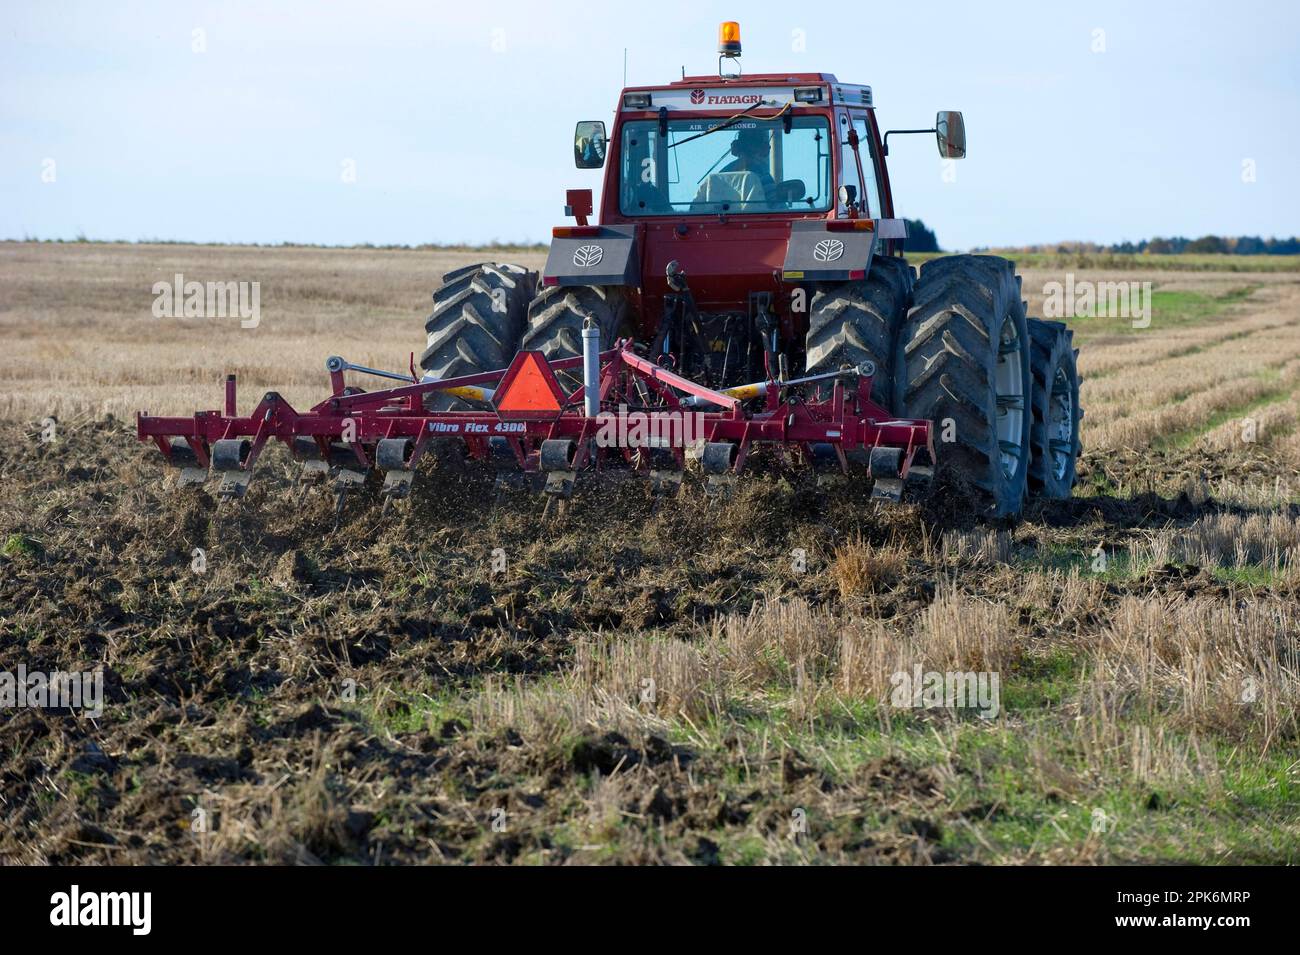 Fiatagri tractor with Vibro Flex 4300 cultivator, stubble cultivation, Sweden Stock Photo